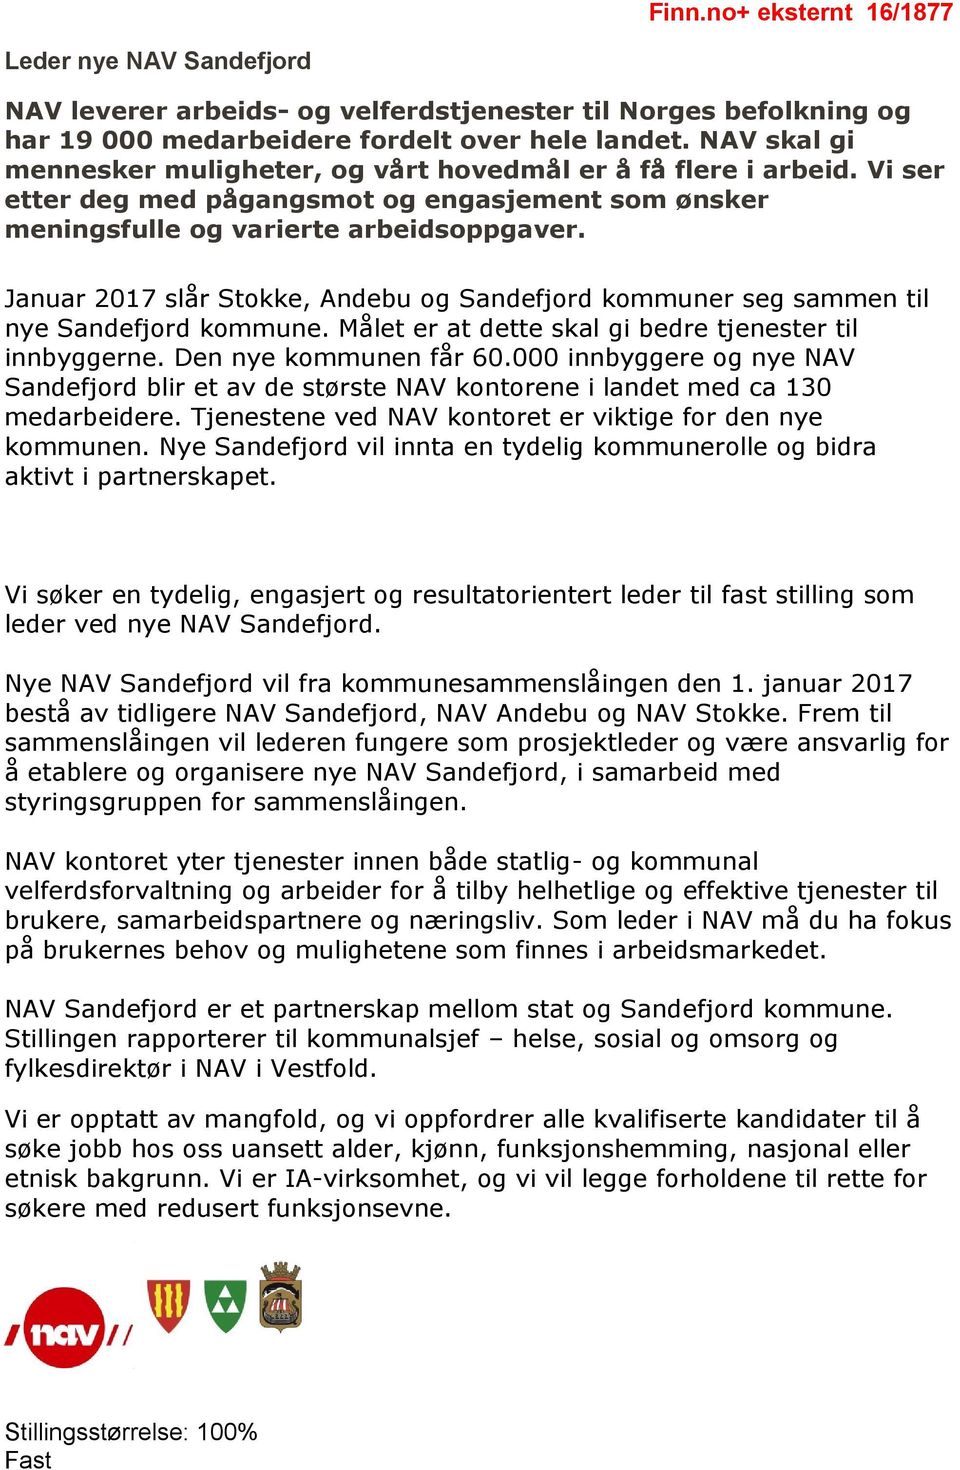 Januar 2017 slår Stokke, Andebu og Sandefjord kommuner seg sammen til nye Sandefjord kommune. Målet er at dette skal gi bedre tjenester til innbyggerne. Den nye kommunen får 60.